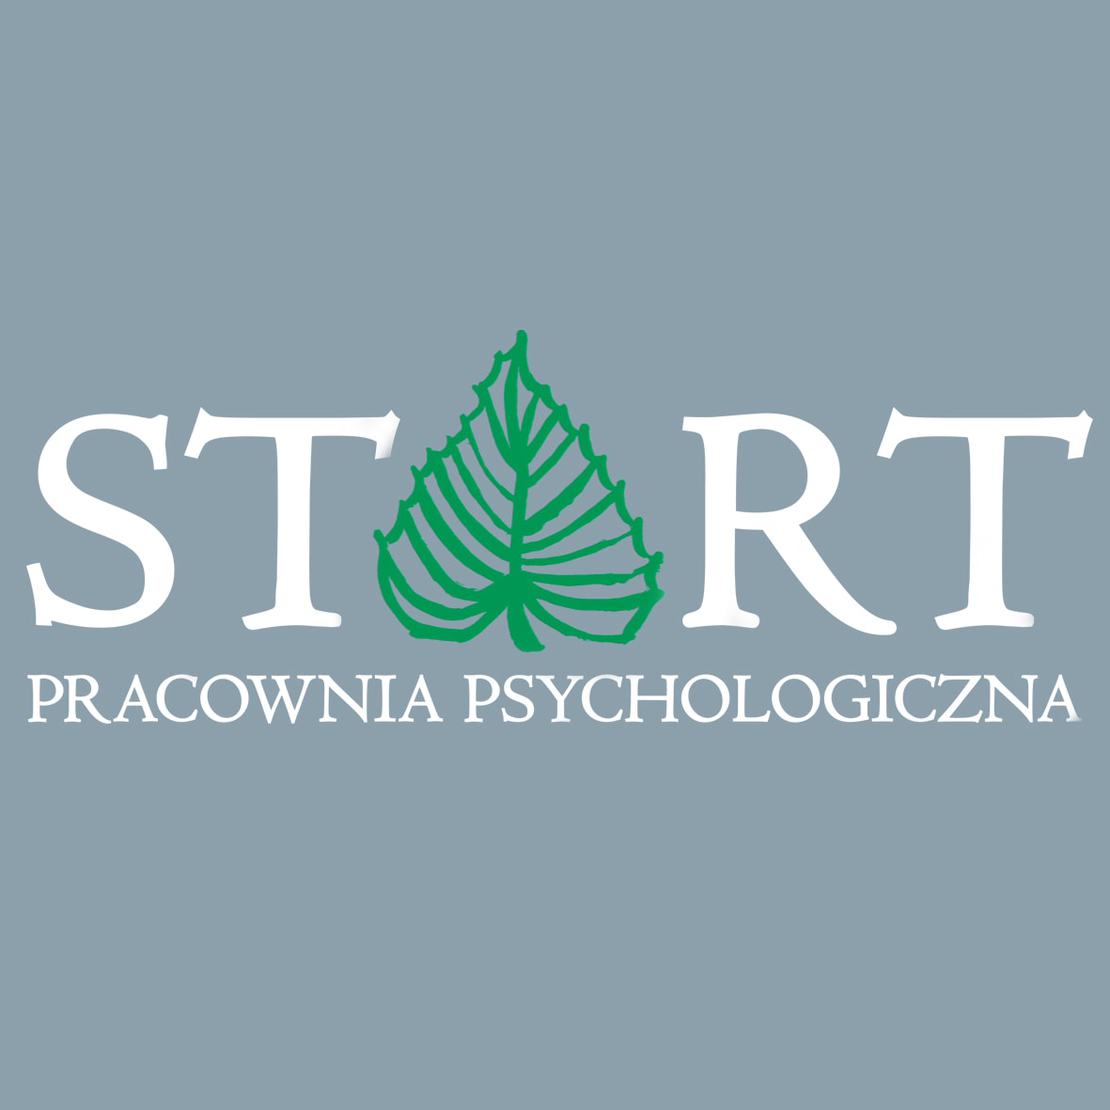 polski psycholog online, poradnictwo internetowe